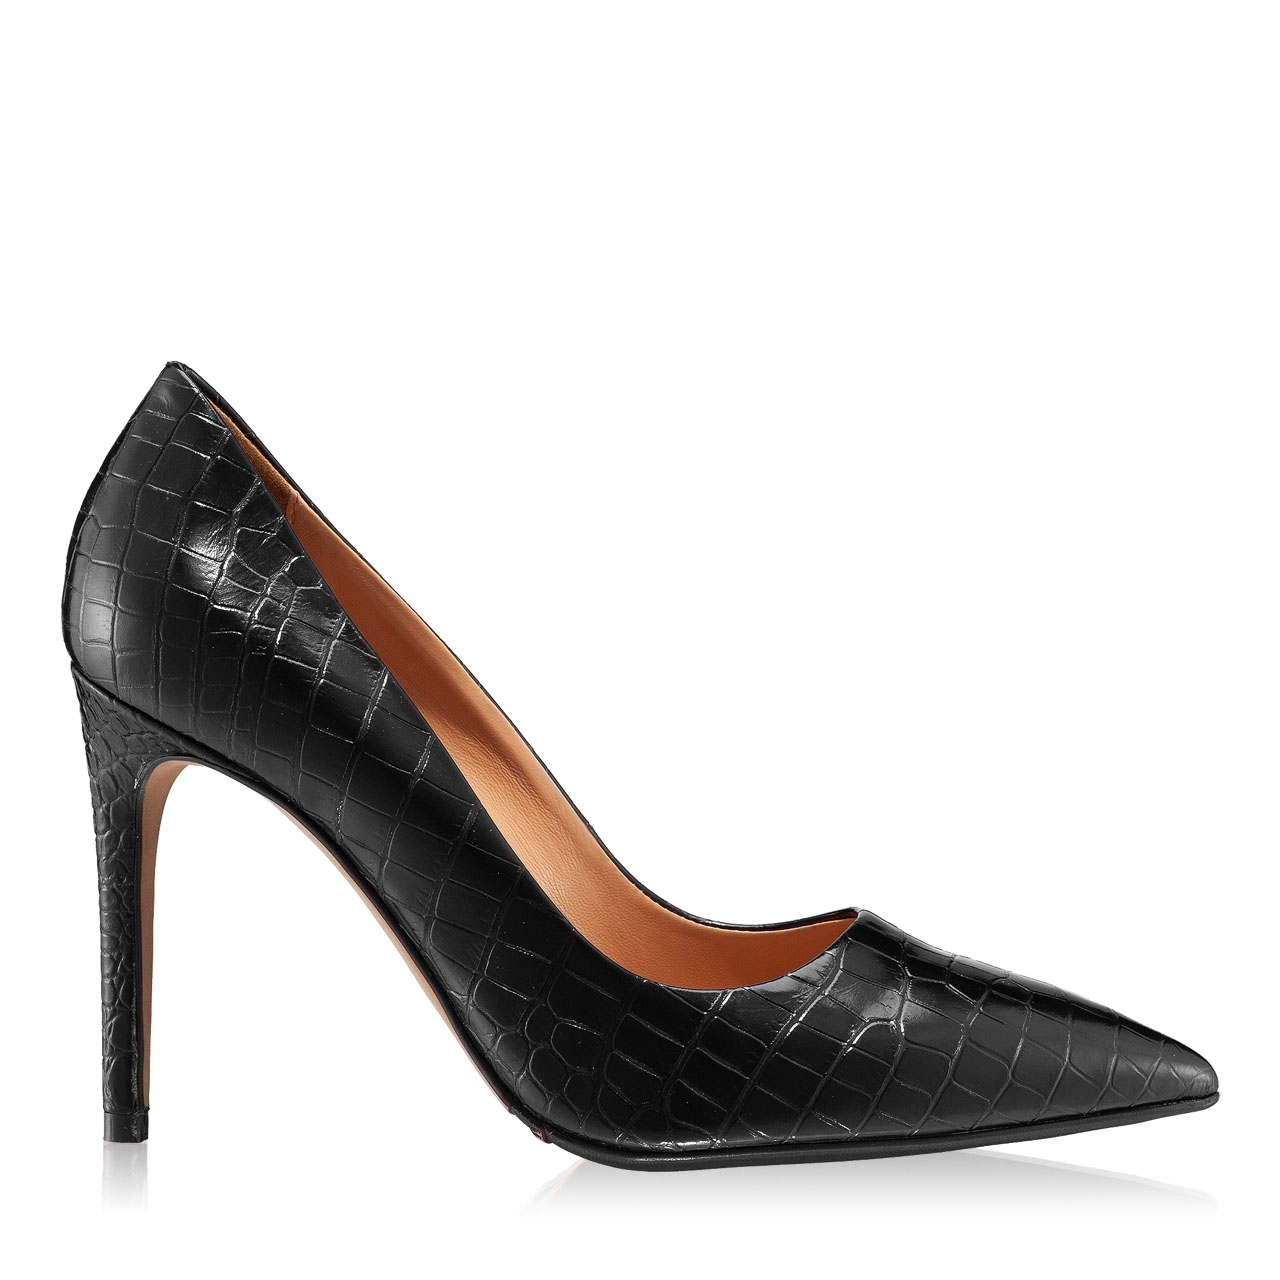 Imagine Pantofi Eleganti Dama 4332 Croco Negru